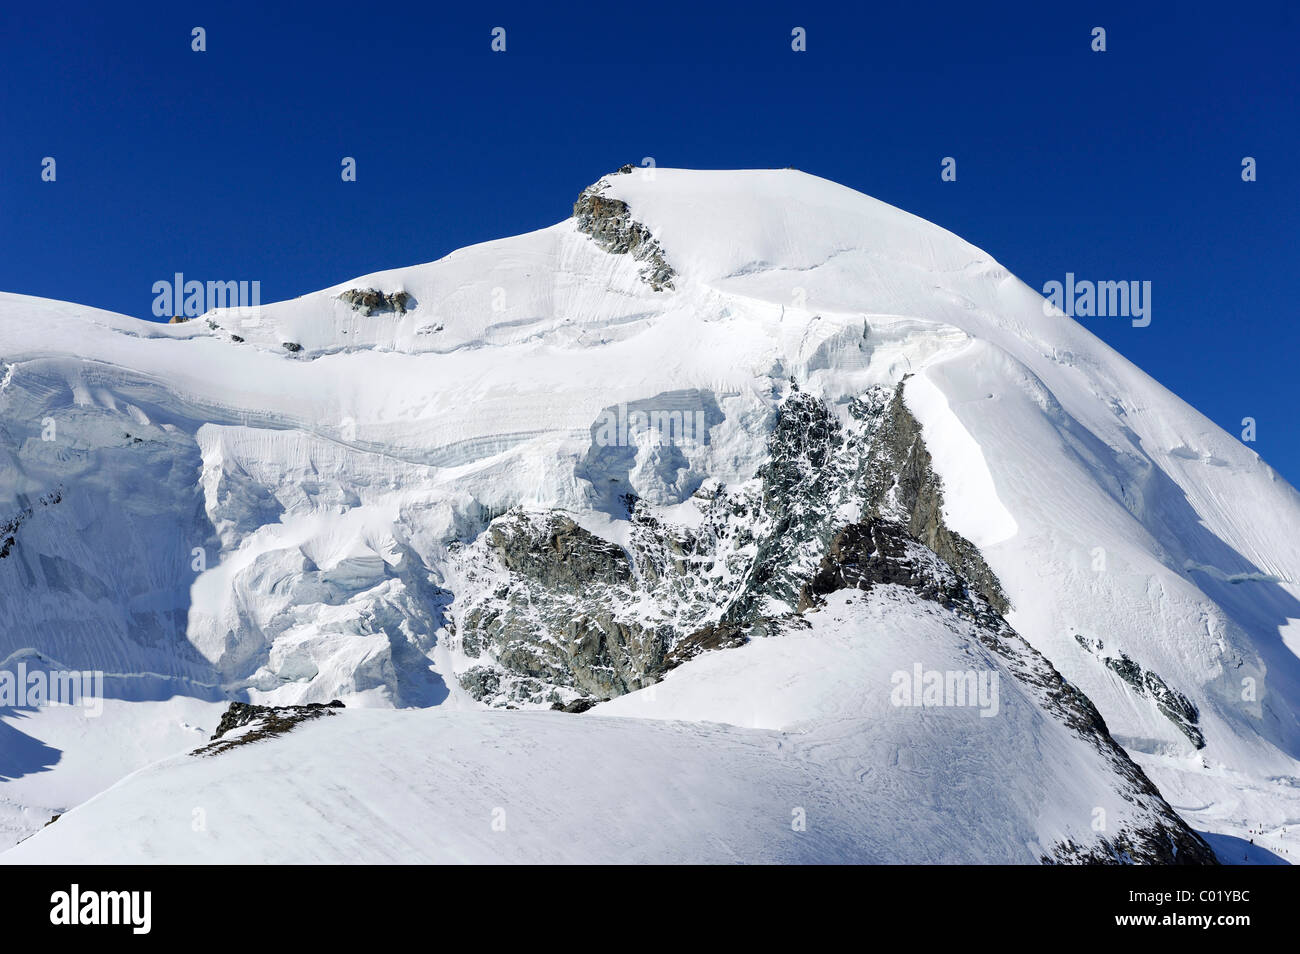 Mt. Allalinhorn, Pennine vicino a Saas fee, Vallese, Svizzera, Europa Foto Stock